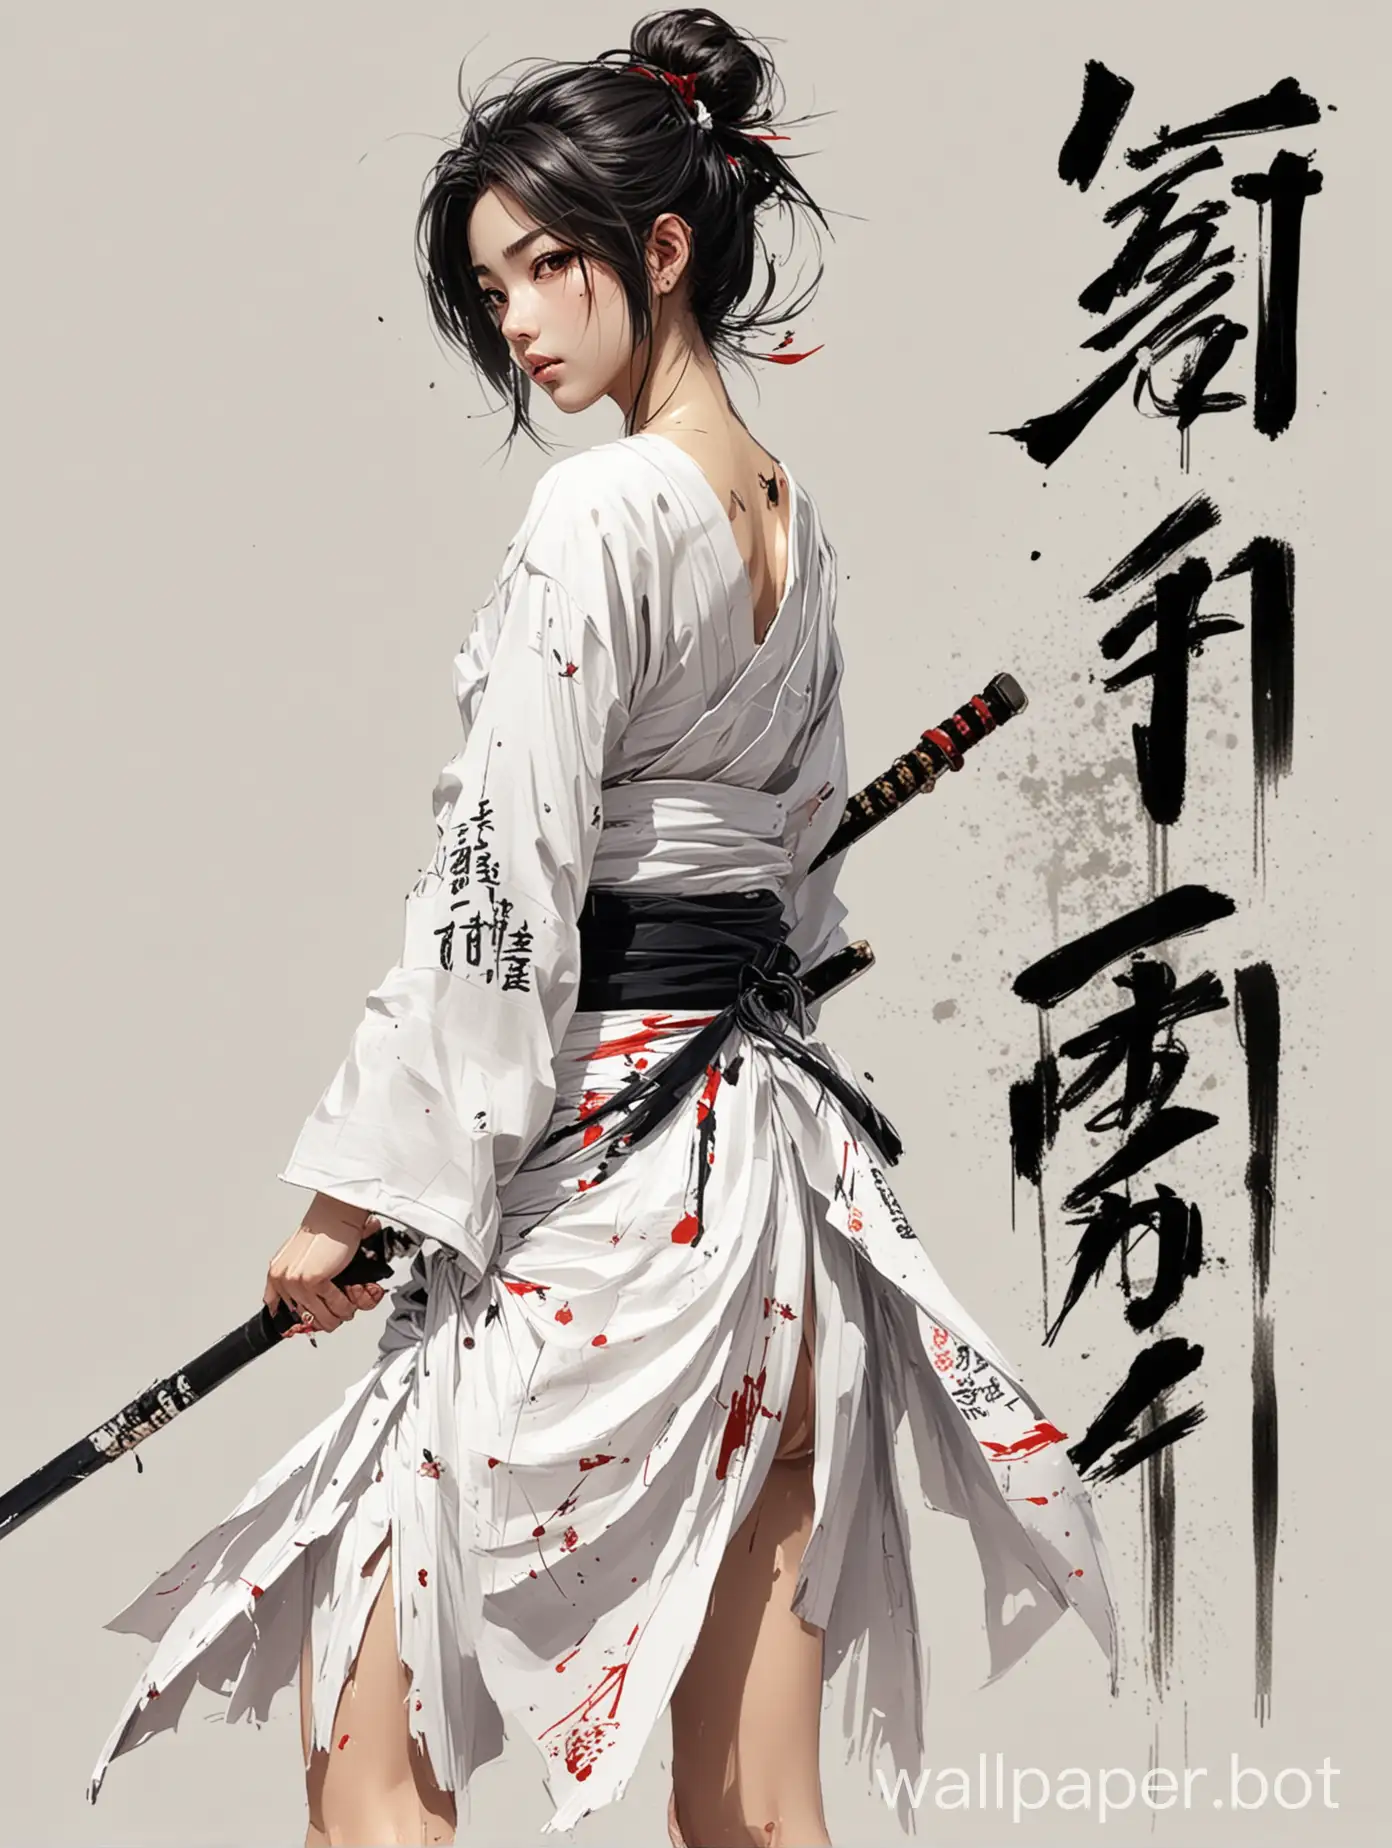 Elegant-Japanese-Girl-in-White-Dress-Samurai-Sketching-Style-with-Anime-Influence